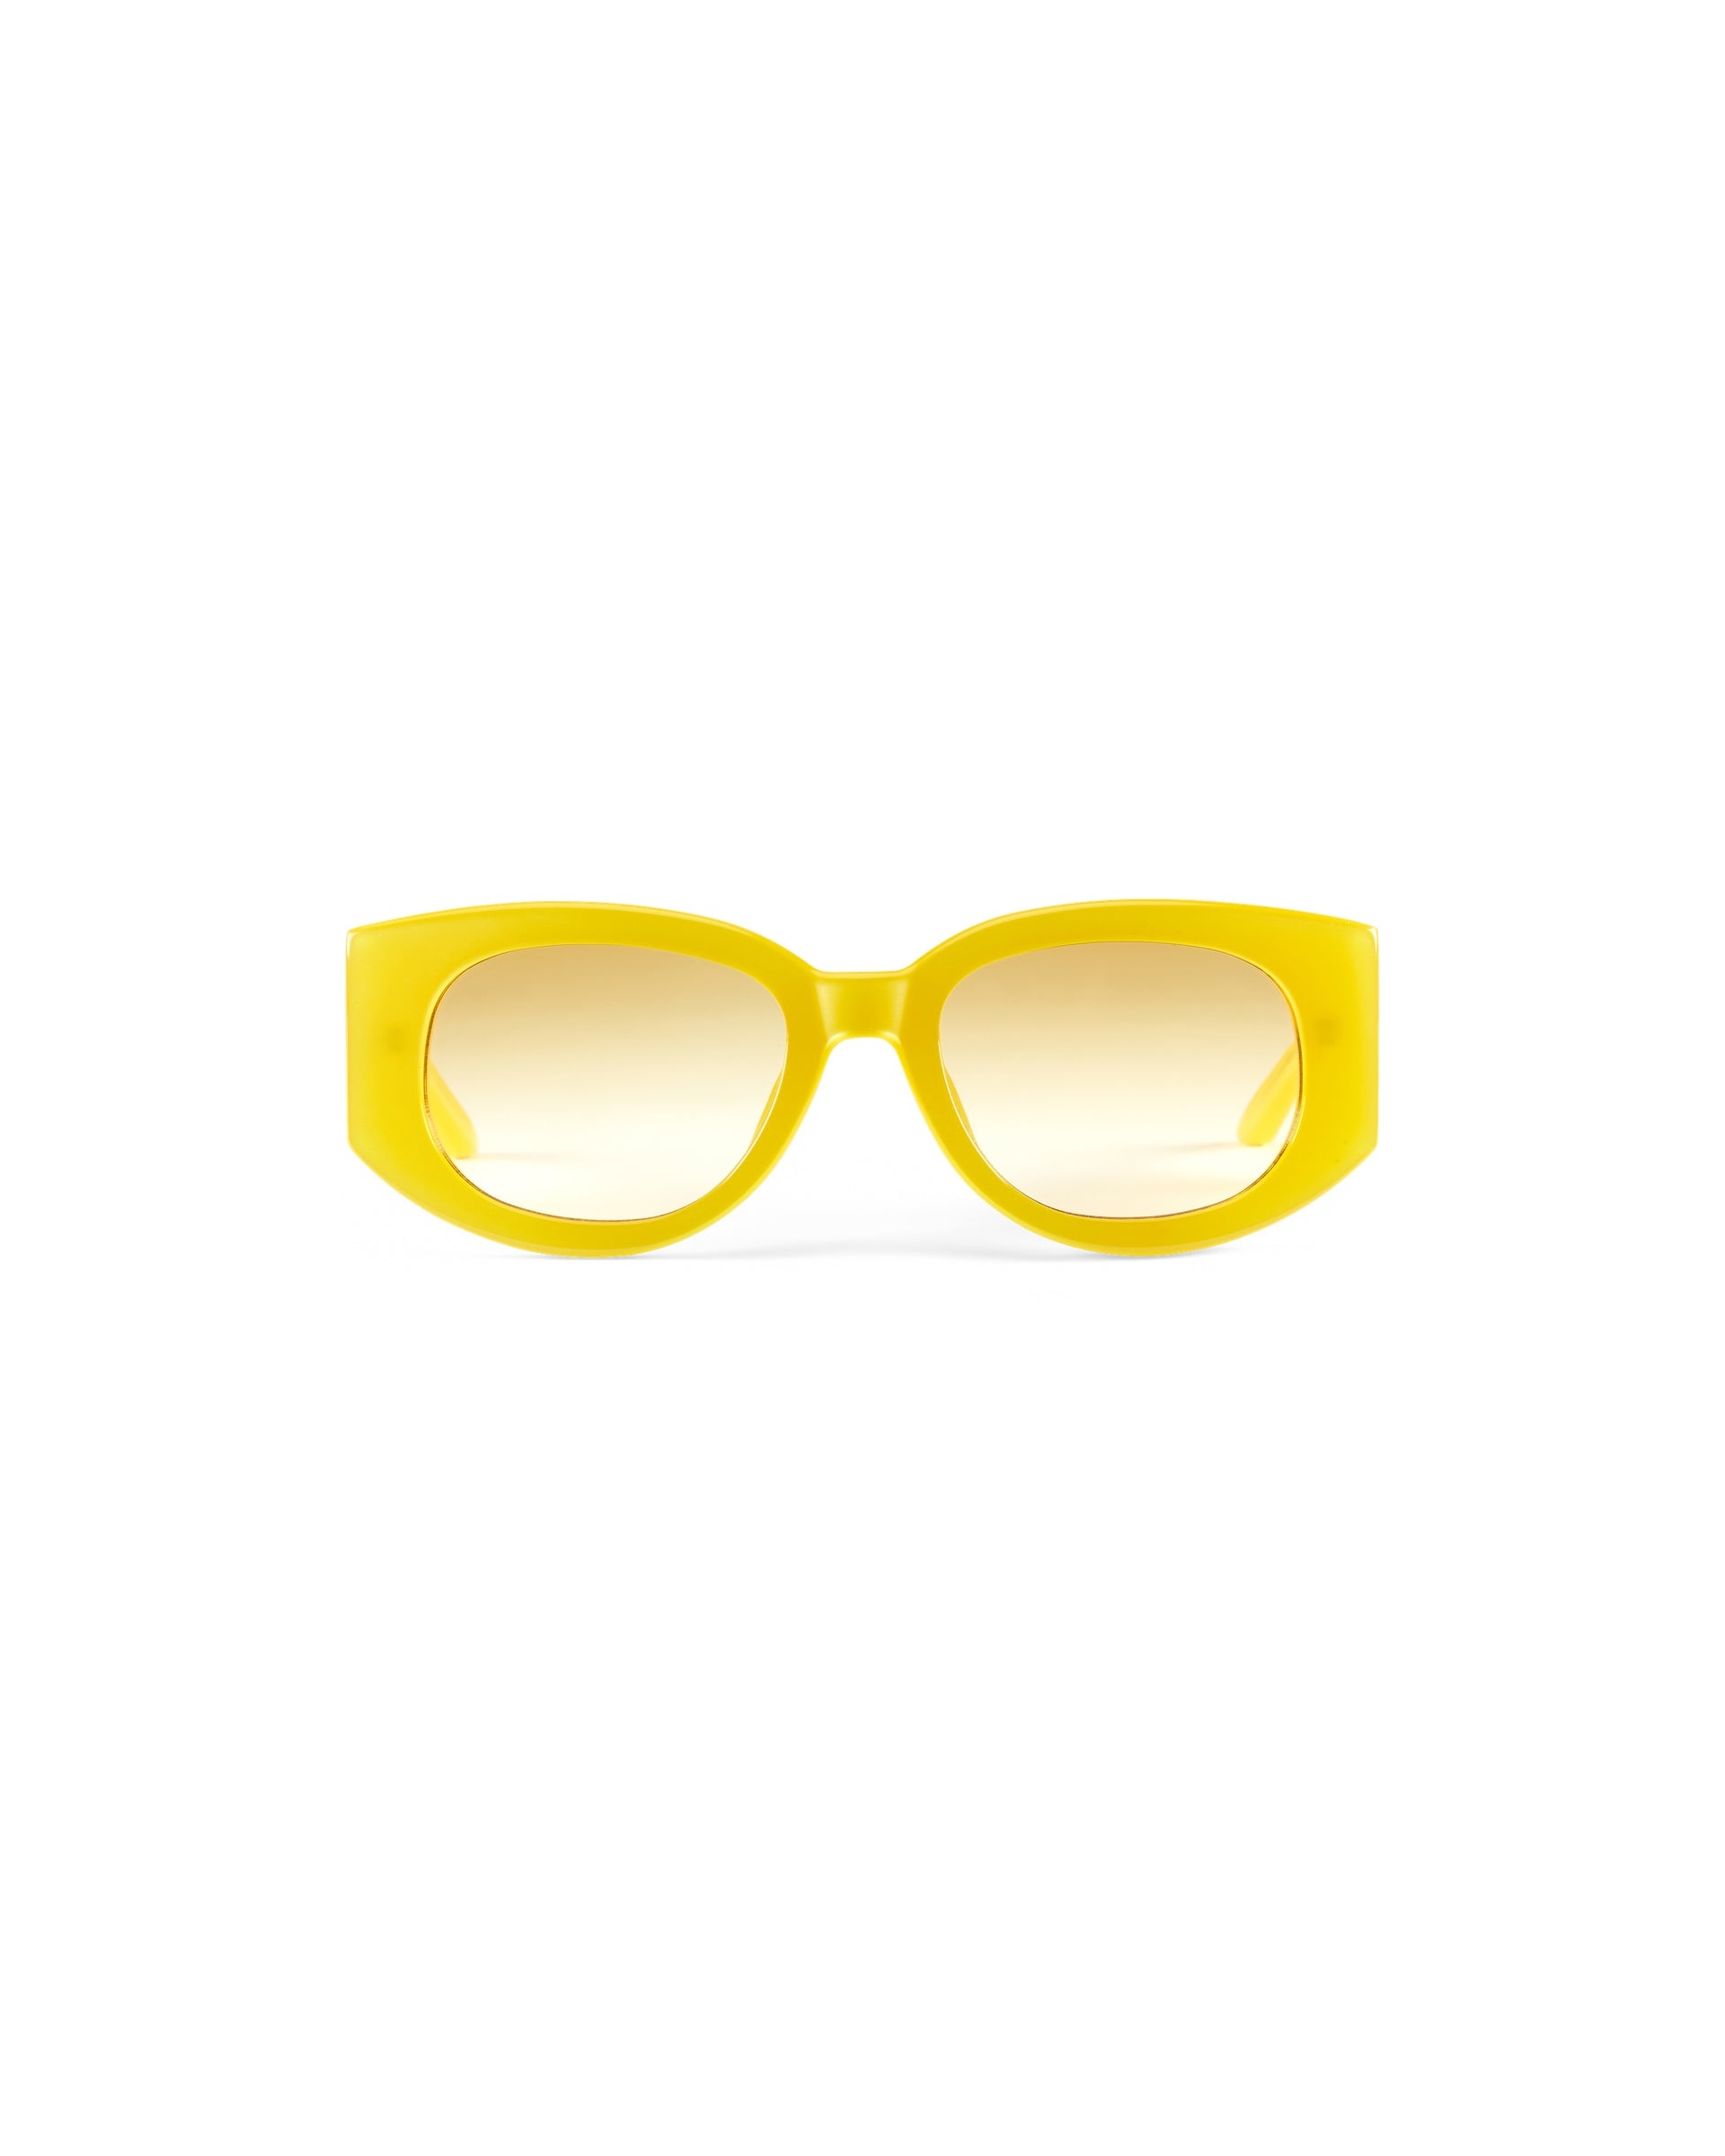 Memphis Yellow & Gold Sunglasses - 2